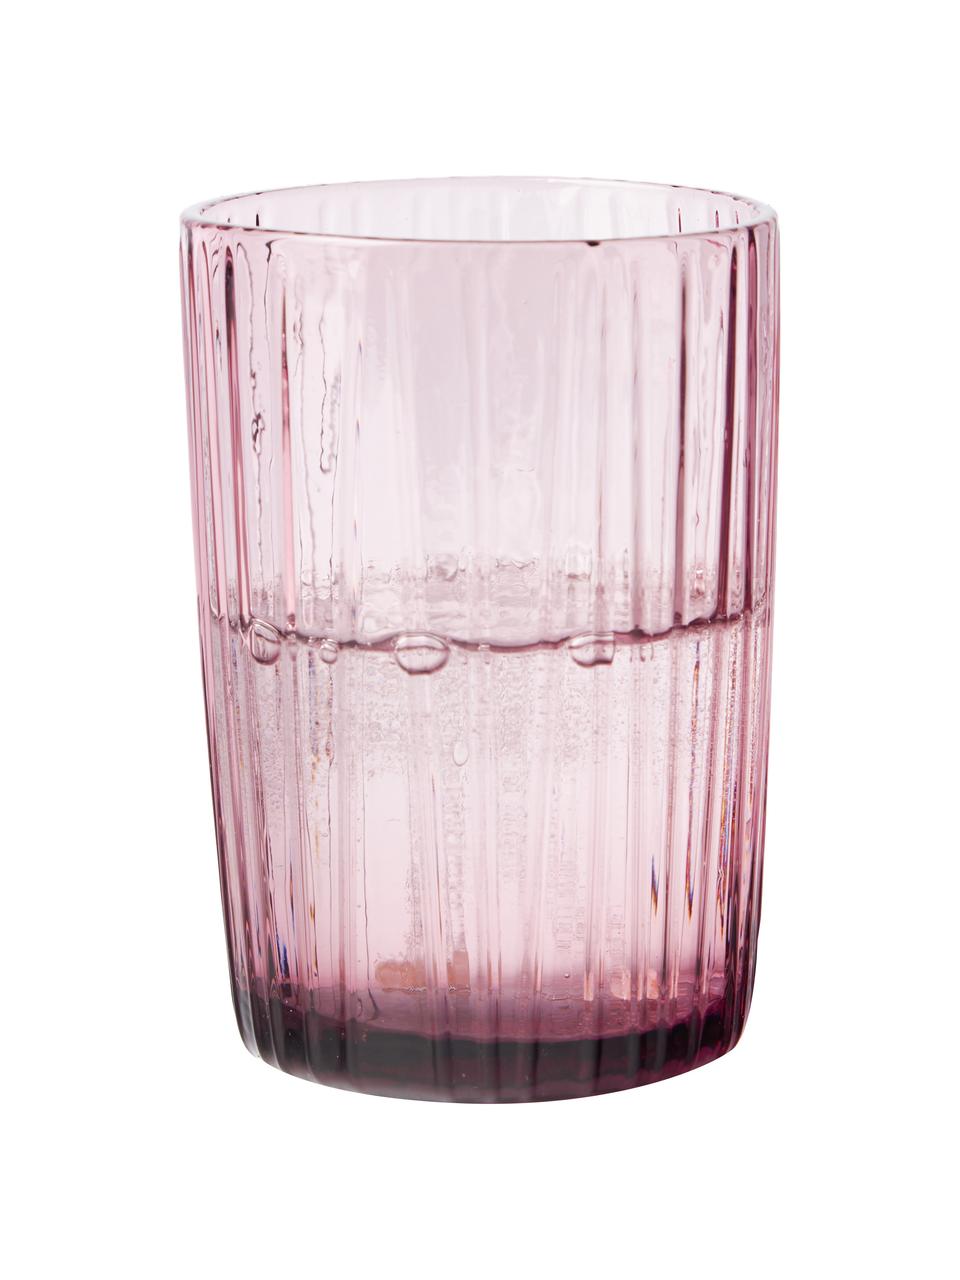 Waterglazen Kusintha in roze met groefreliëf, 4 stuks, Glas, Roze, transaparant, Ø 7 x H 10 cm